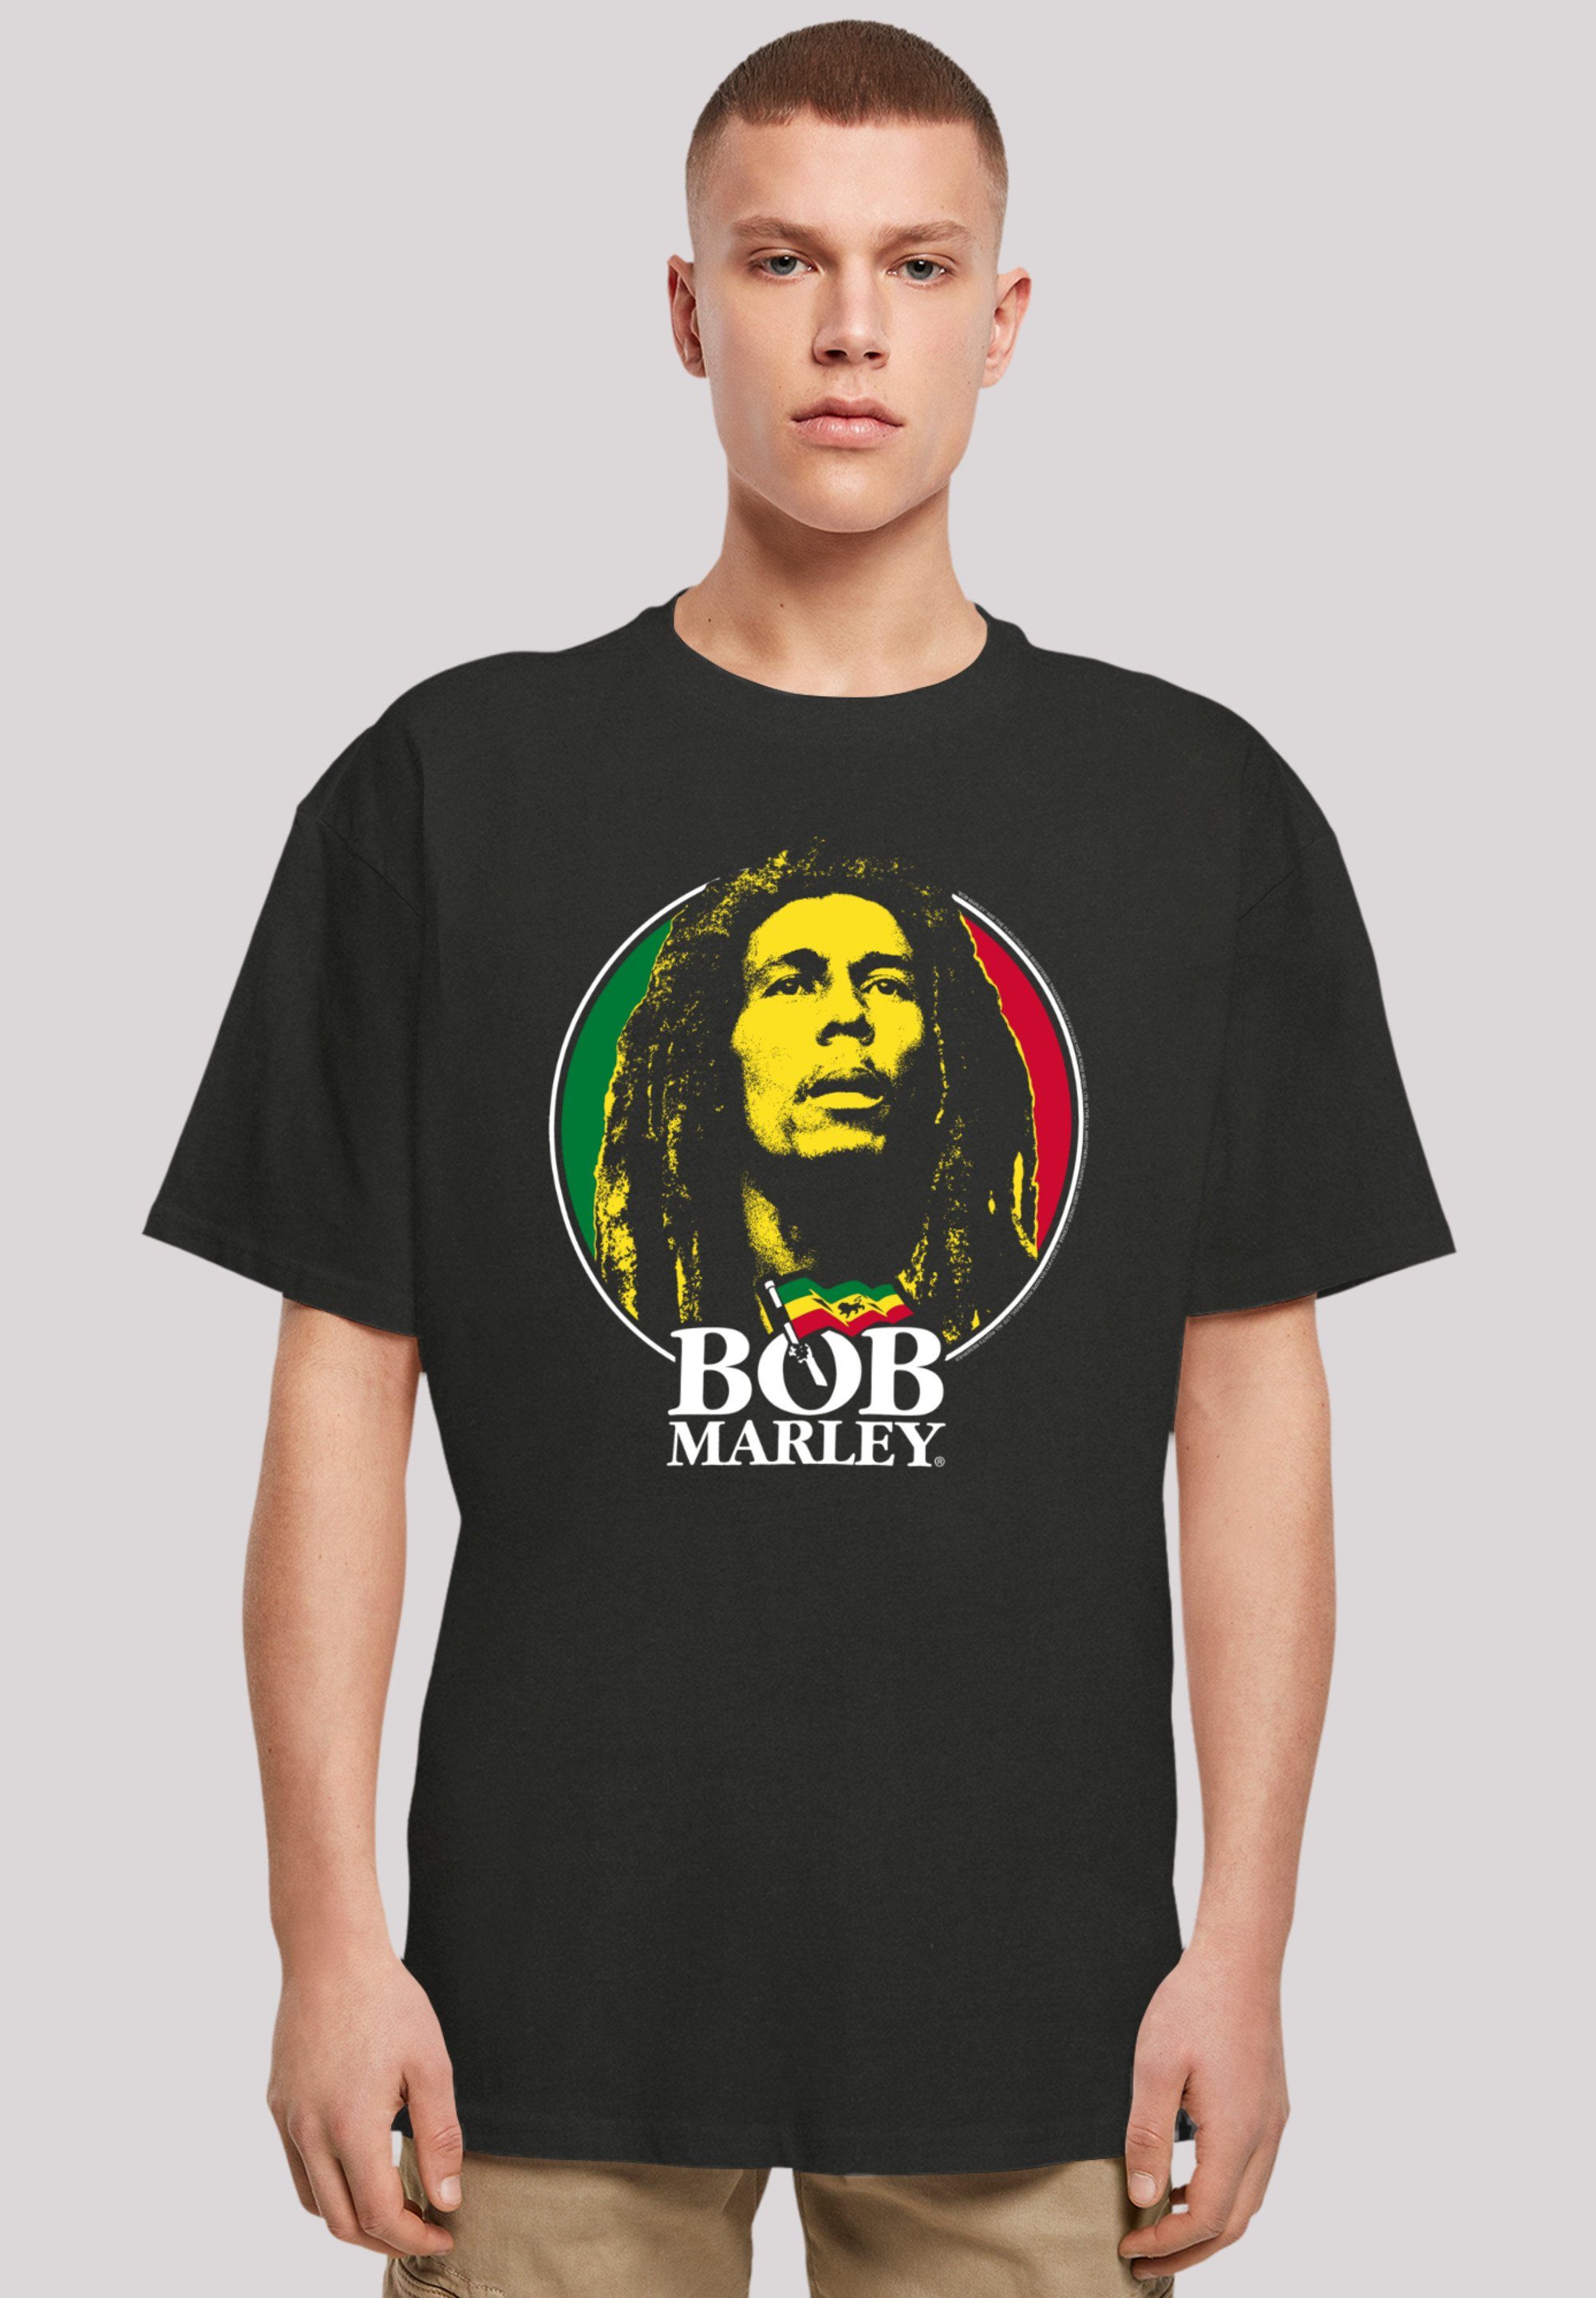 By Off Rock Music Badge Reggae Musik, Premium T-Shirt F4NT4STIC Qualität, Bob Logo Marley